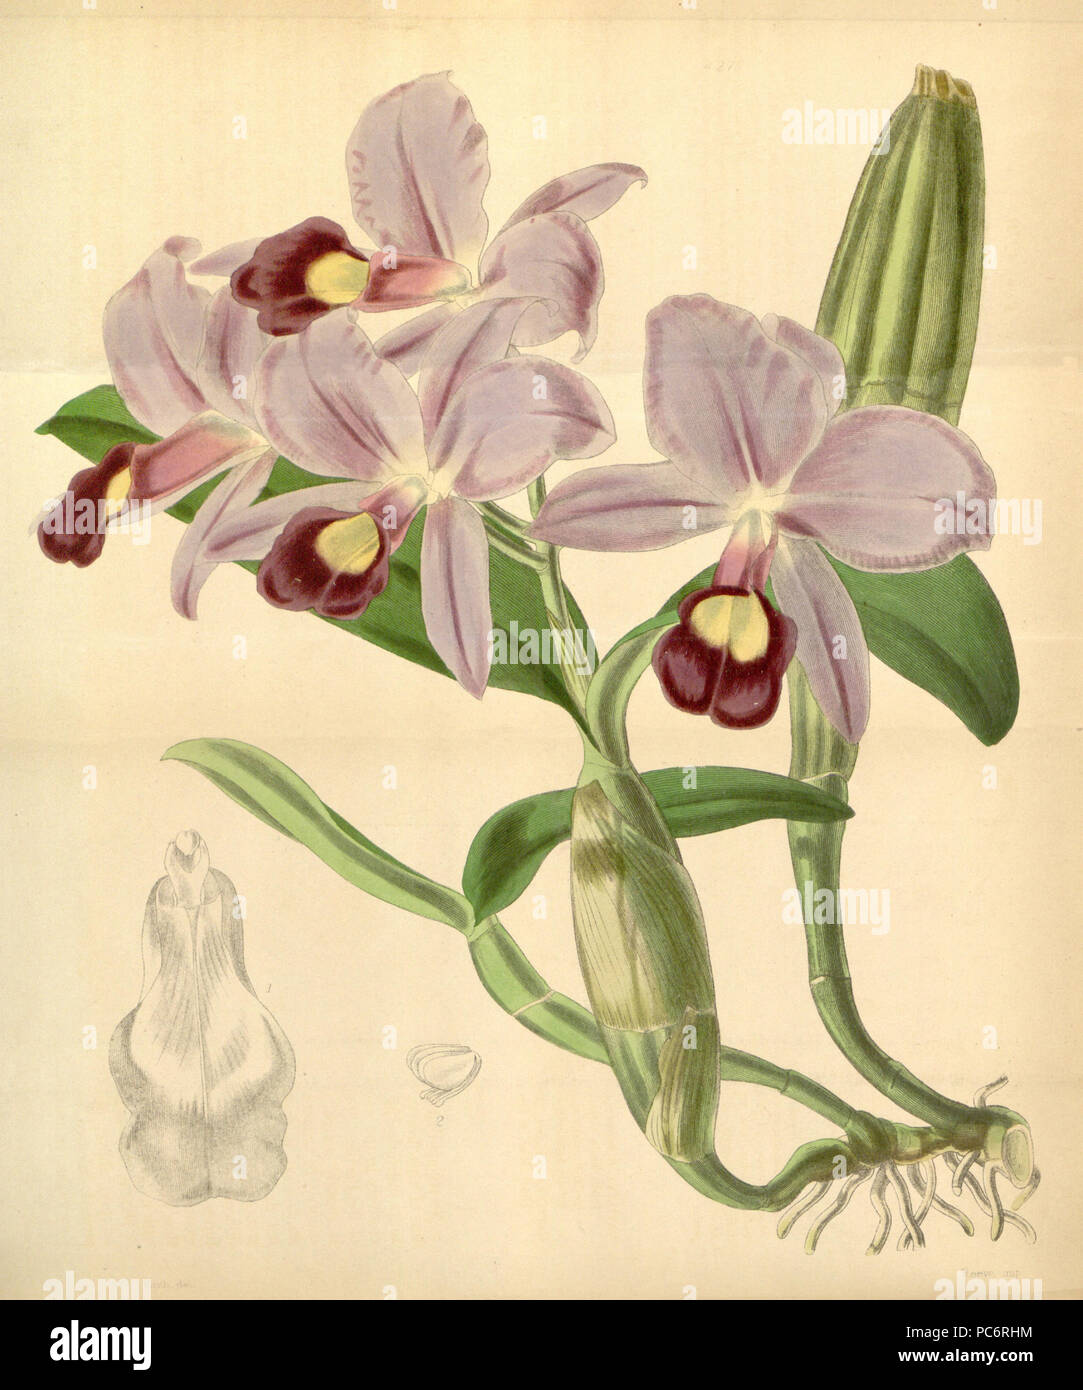 256 Guarianthe skinneri (as Cattleya skinneri) - Curtis' 72 (Ser. 3 no. 2) pl. 4270 (1846) Stock Photo